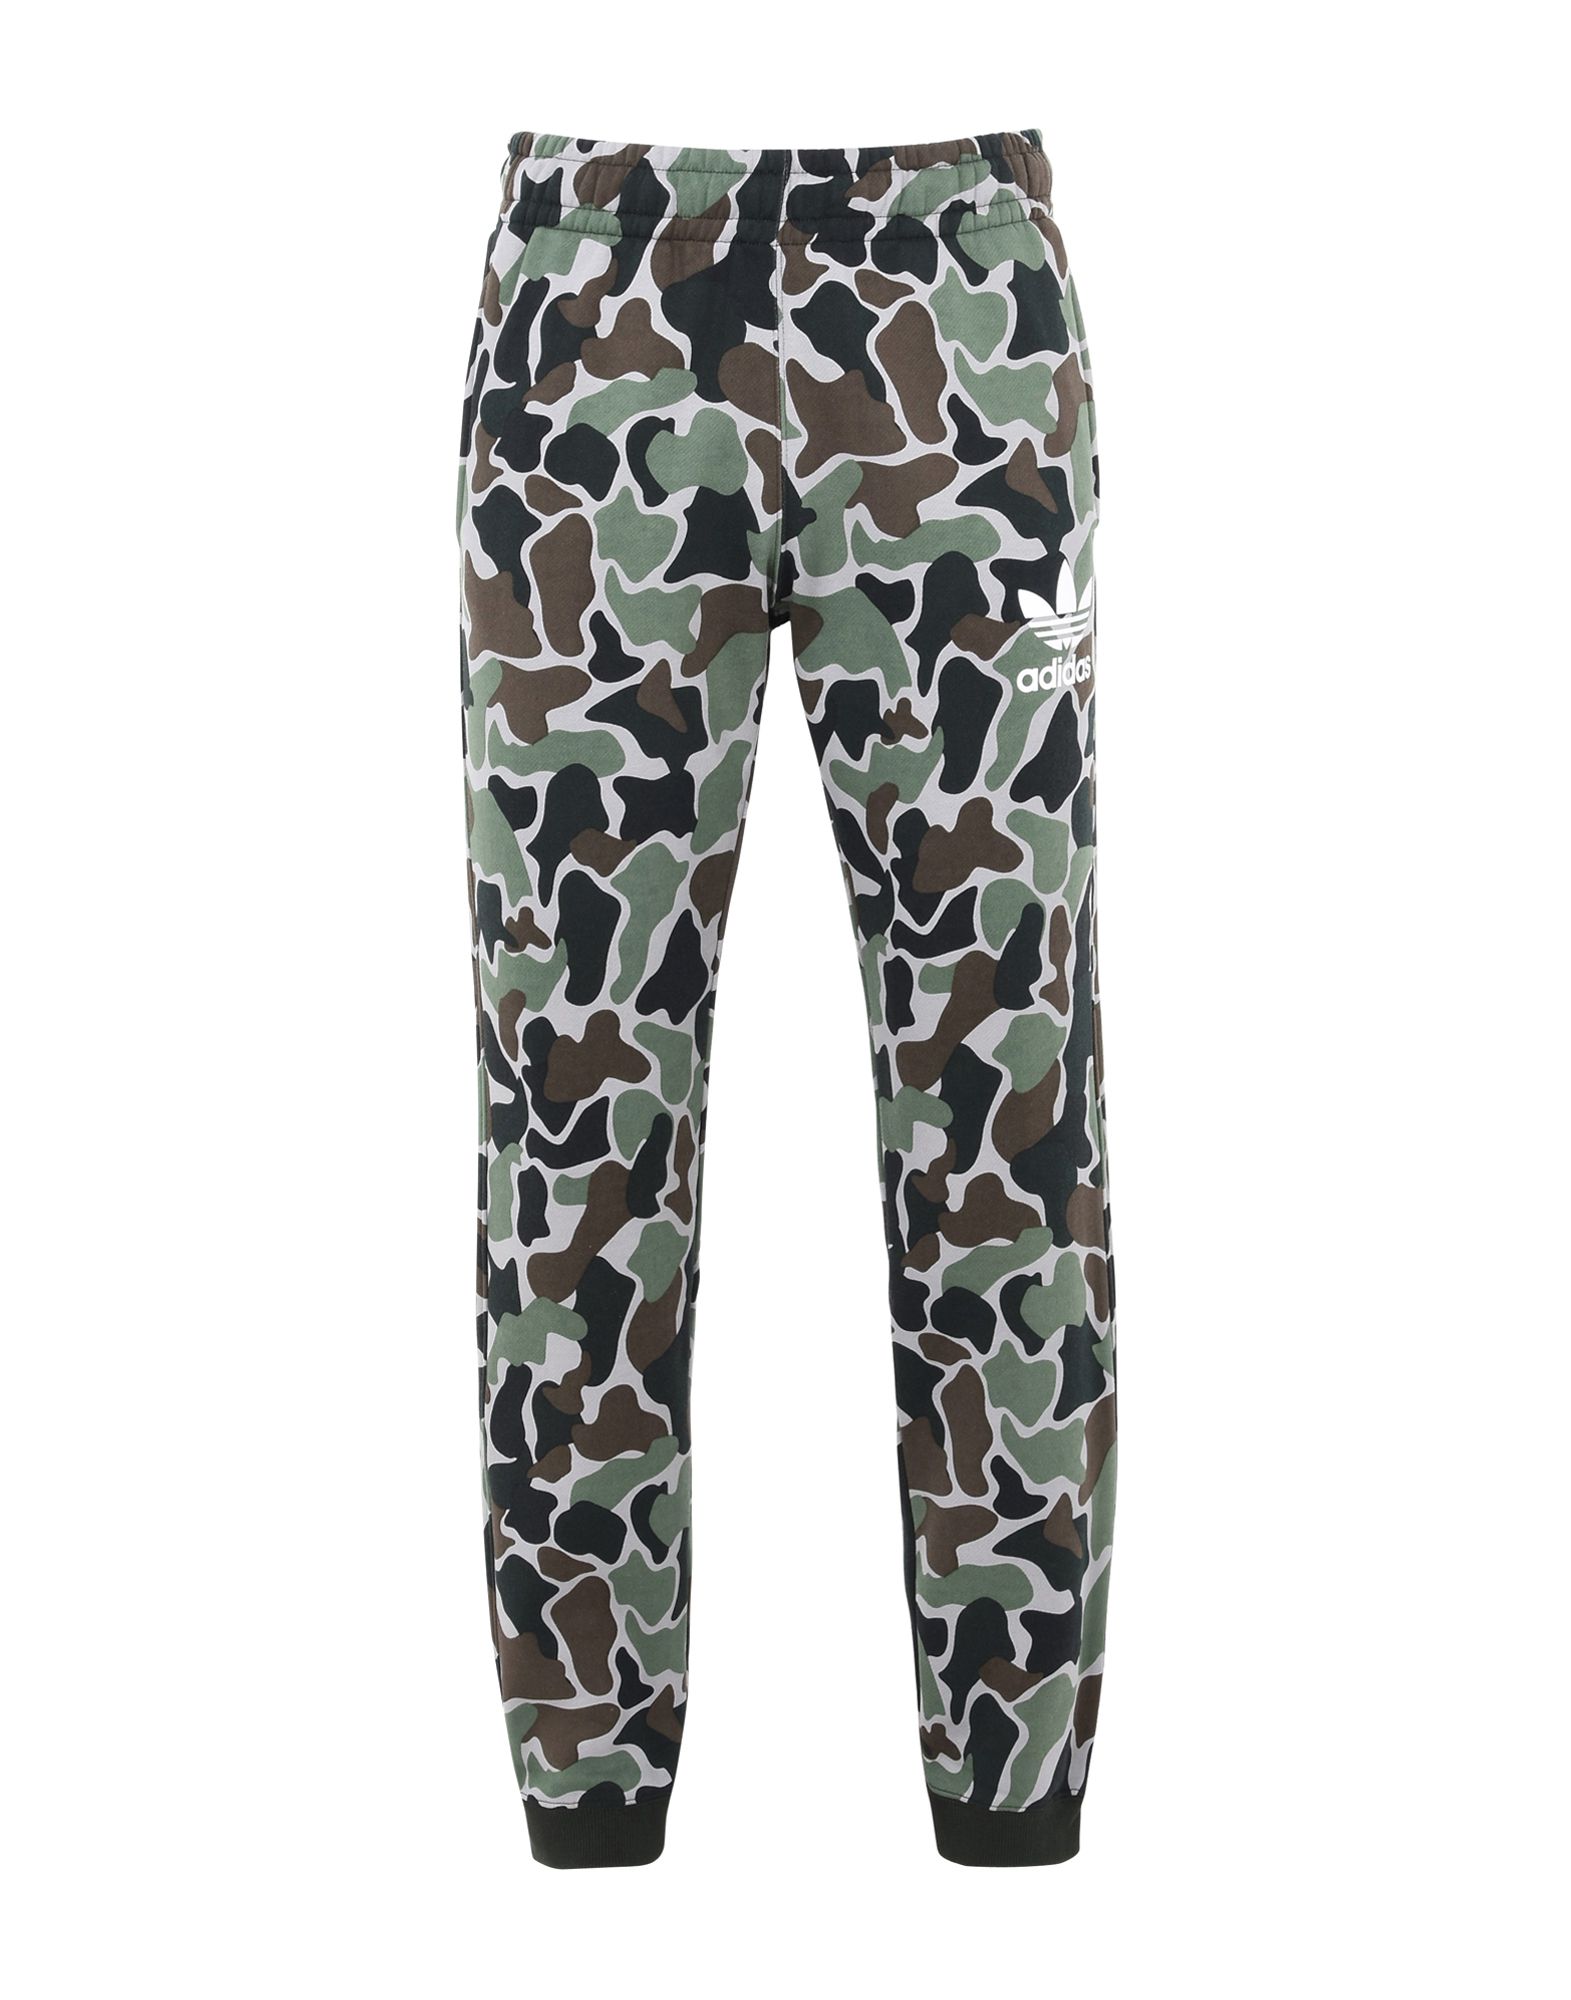 pantaloni militari adidas - 50% di sconto - agriz.it